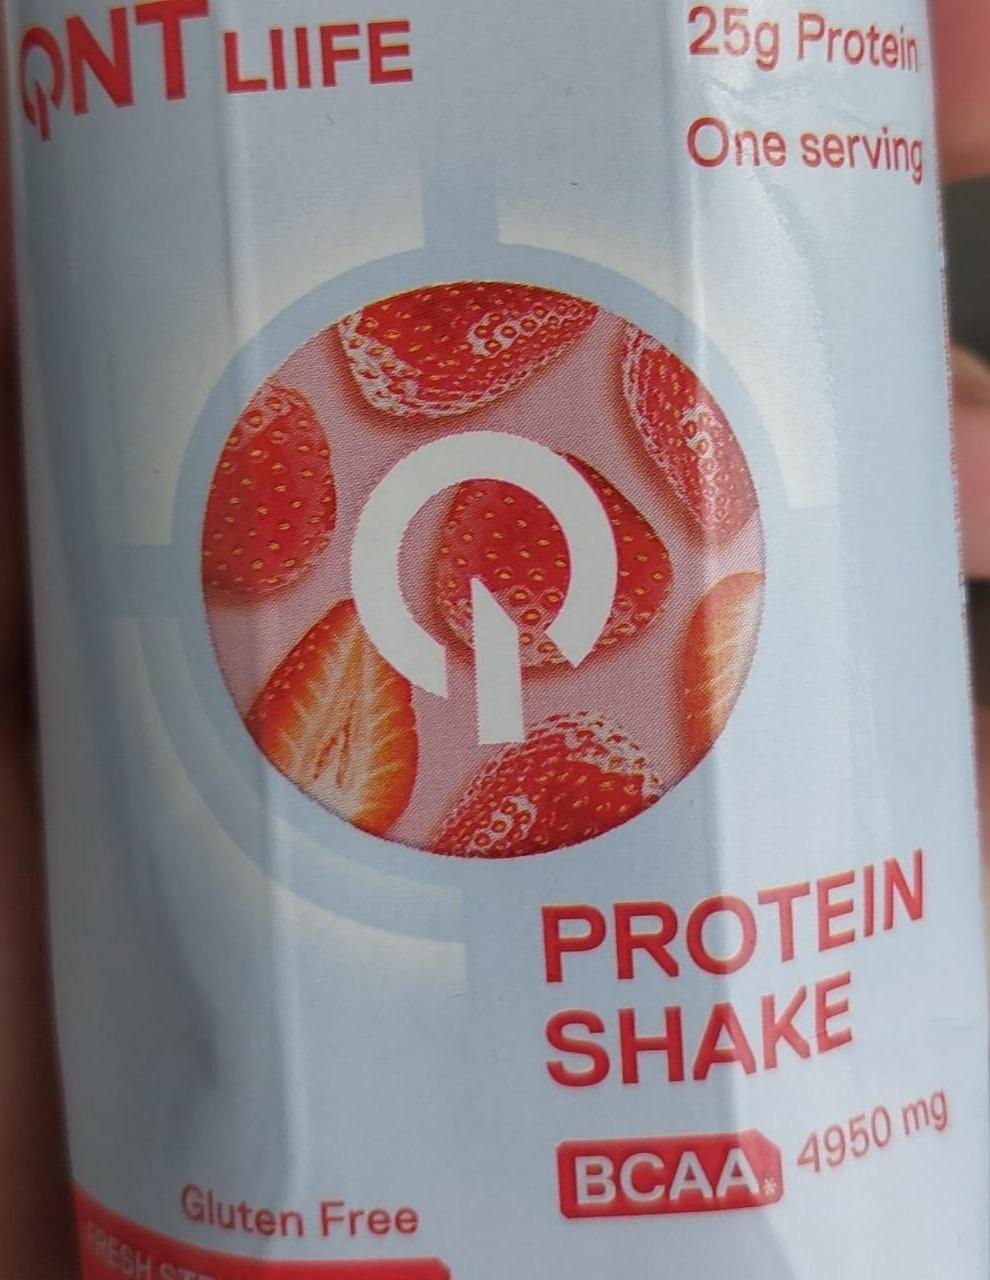 Fotografie - Liife Protein shake strawberry QNT